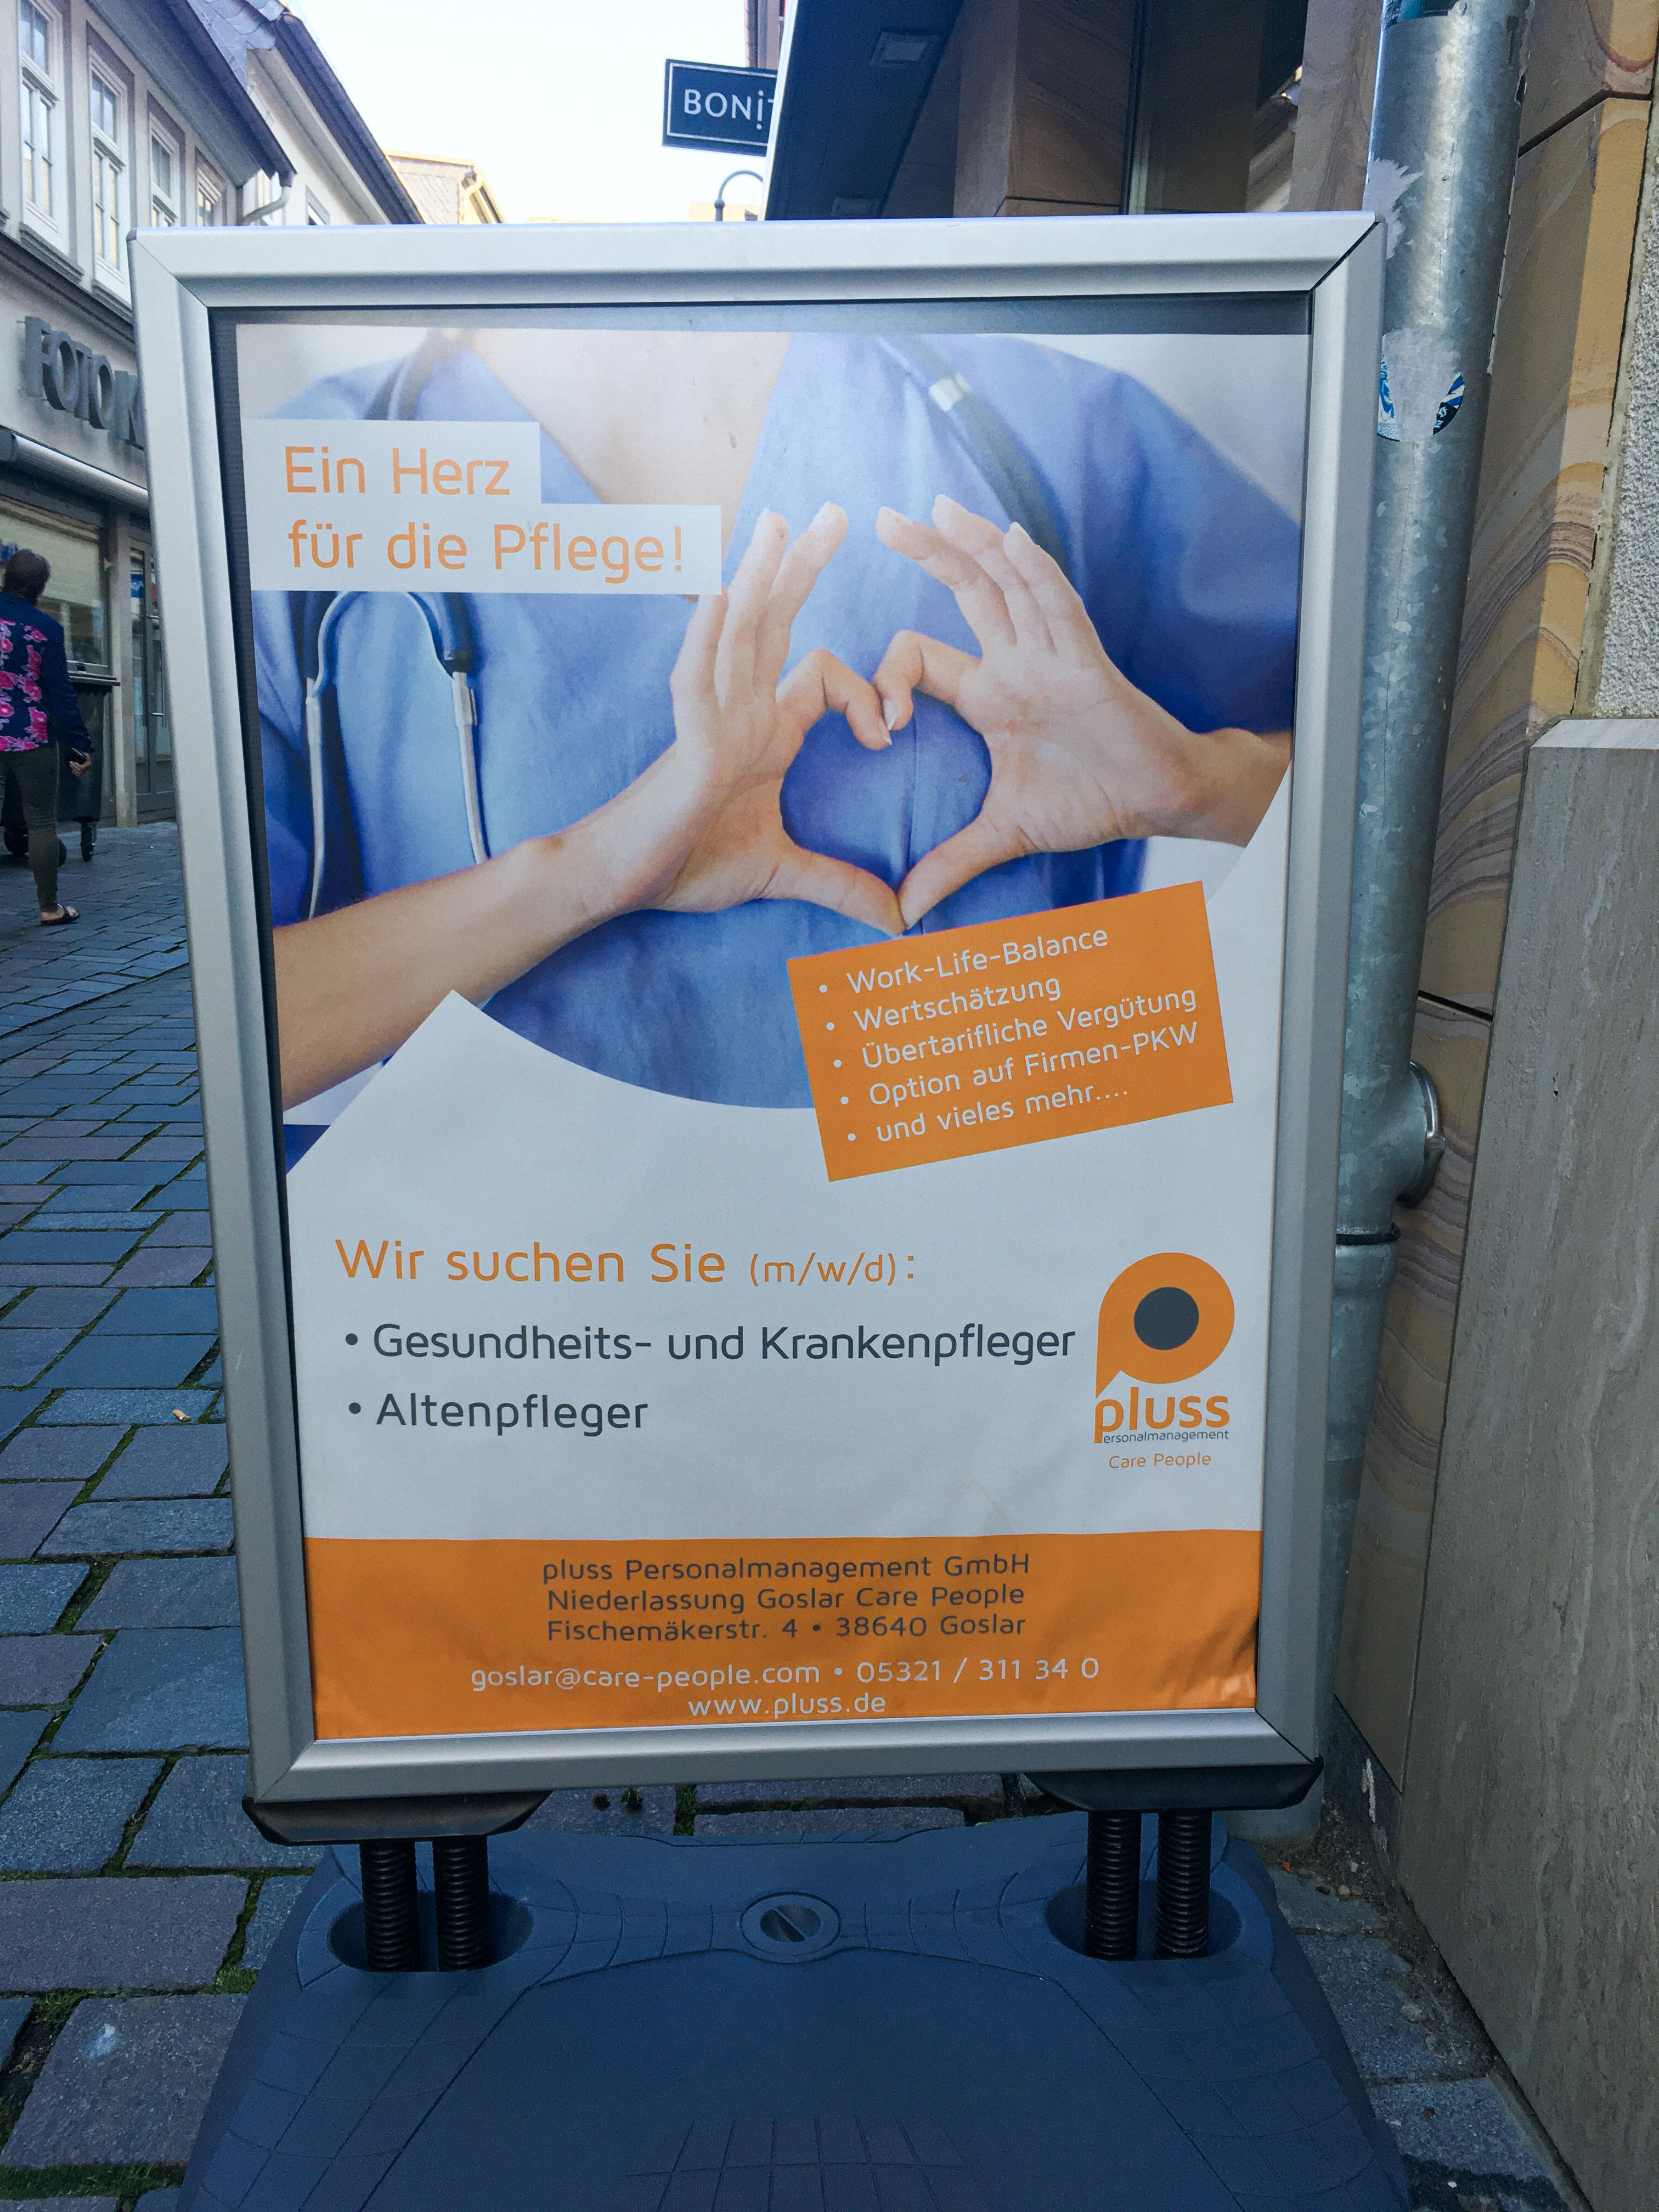 Bilder pluss Goslar - Care People (Medizin/Pflege) & Bildung und Soziales